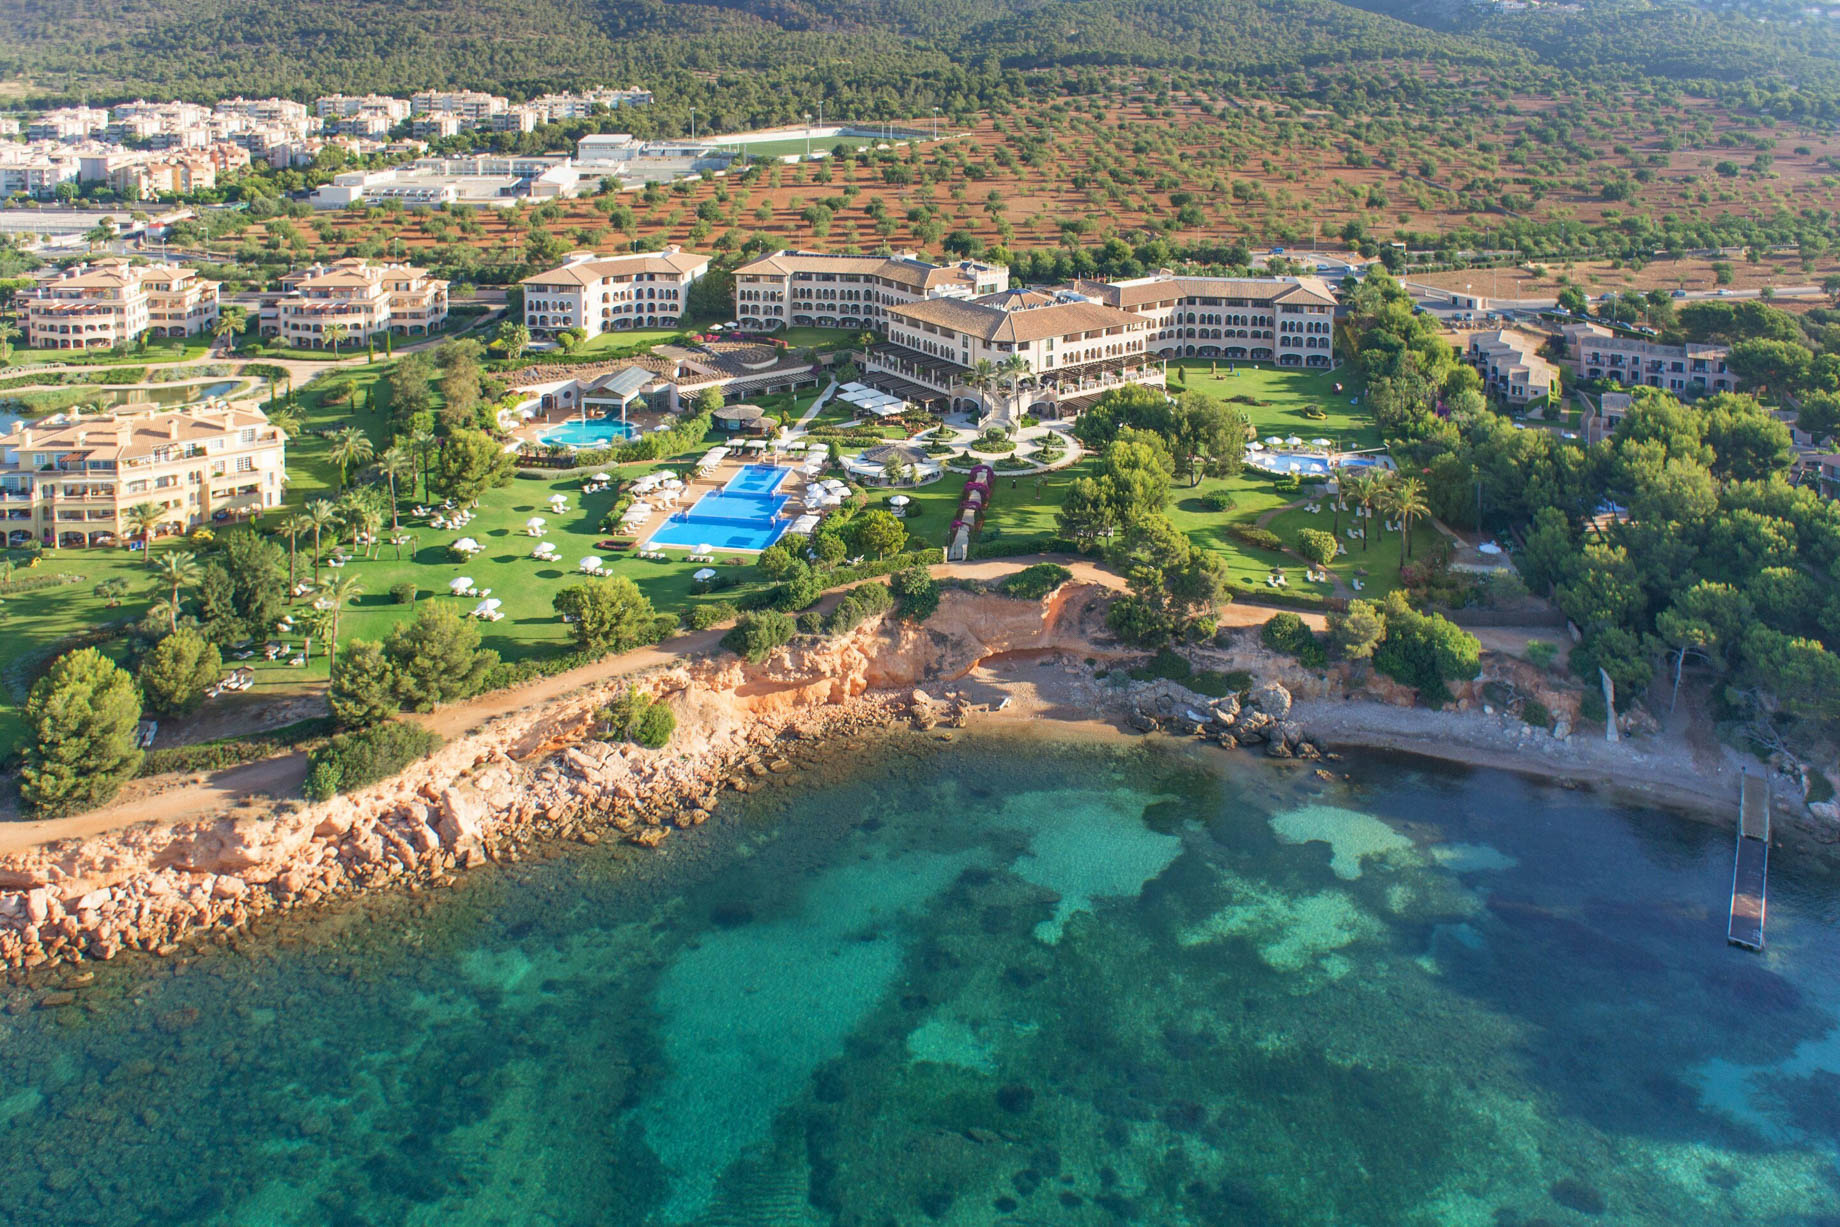 The St. Regis Mardavall Mallorca Luxury Resort - Palma de Mallorca, Spain - Resort Aerial View